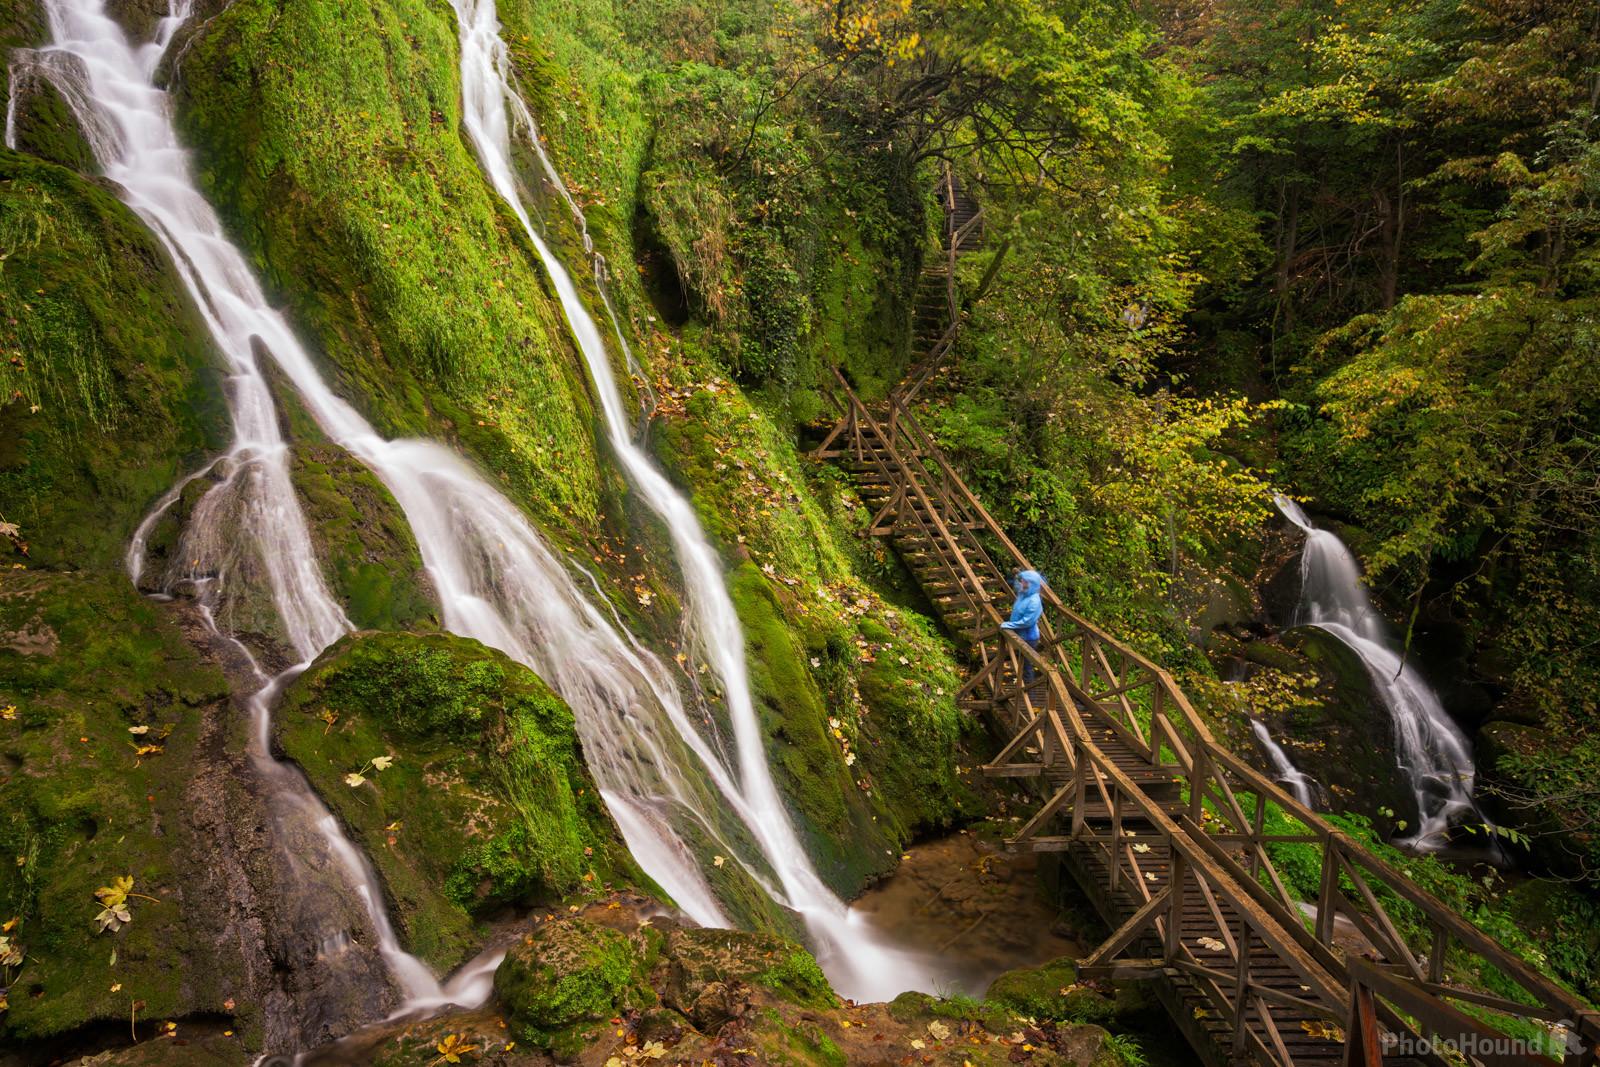 Image of Skakavac waterfall by Antun Cerovecki